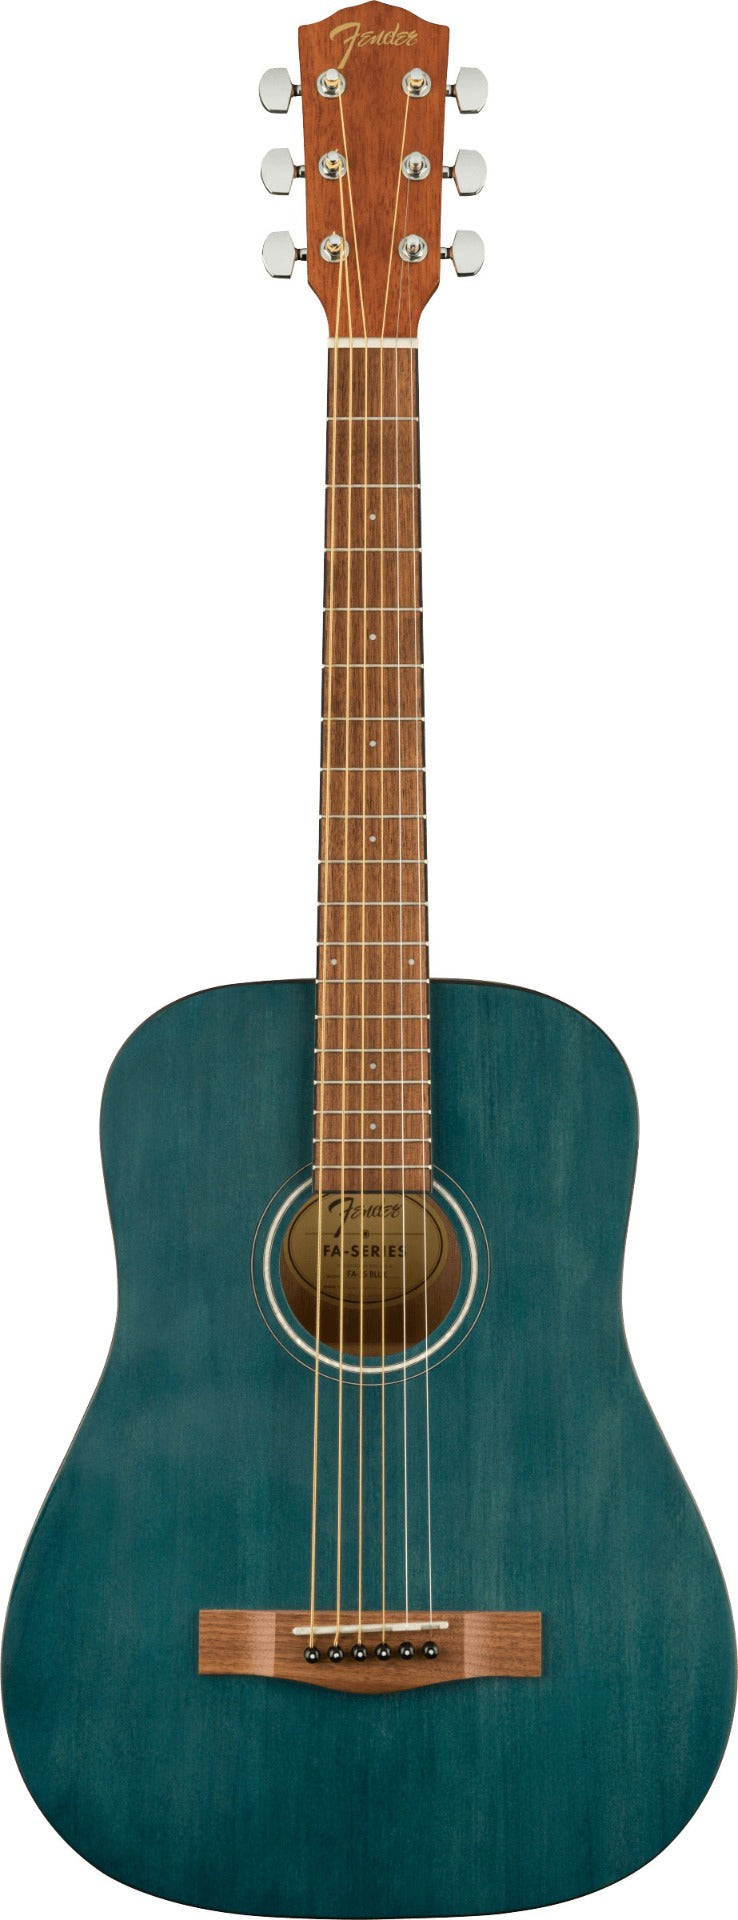 Fender FA-15 3/4 Steel String Acoustic Guitar in Blue